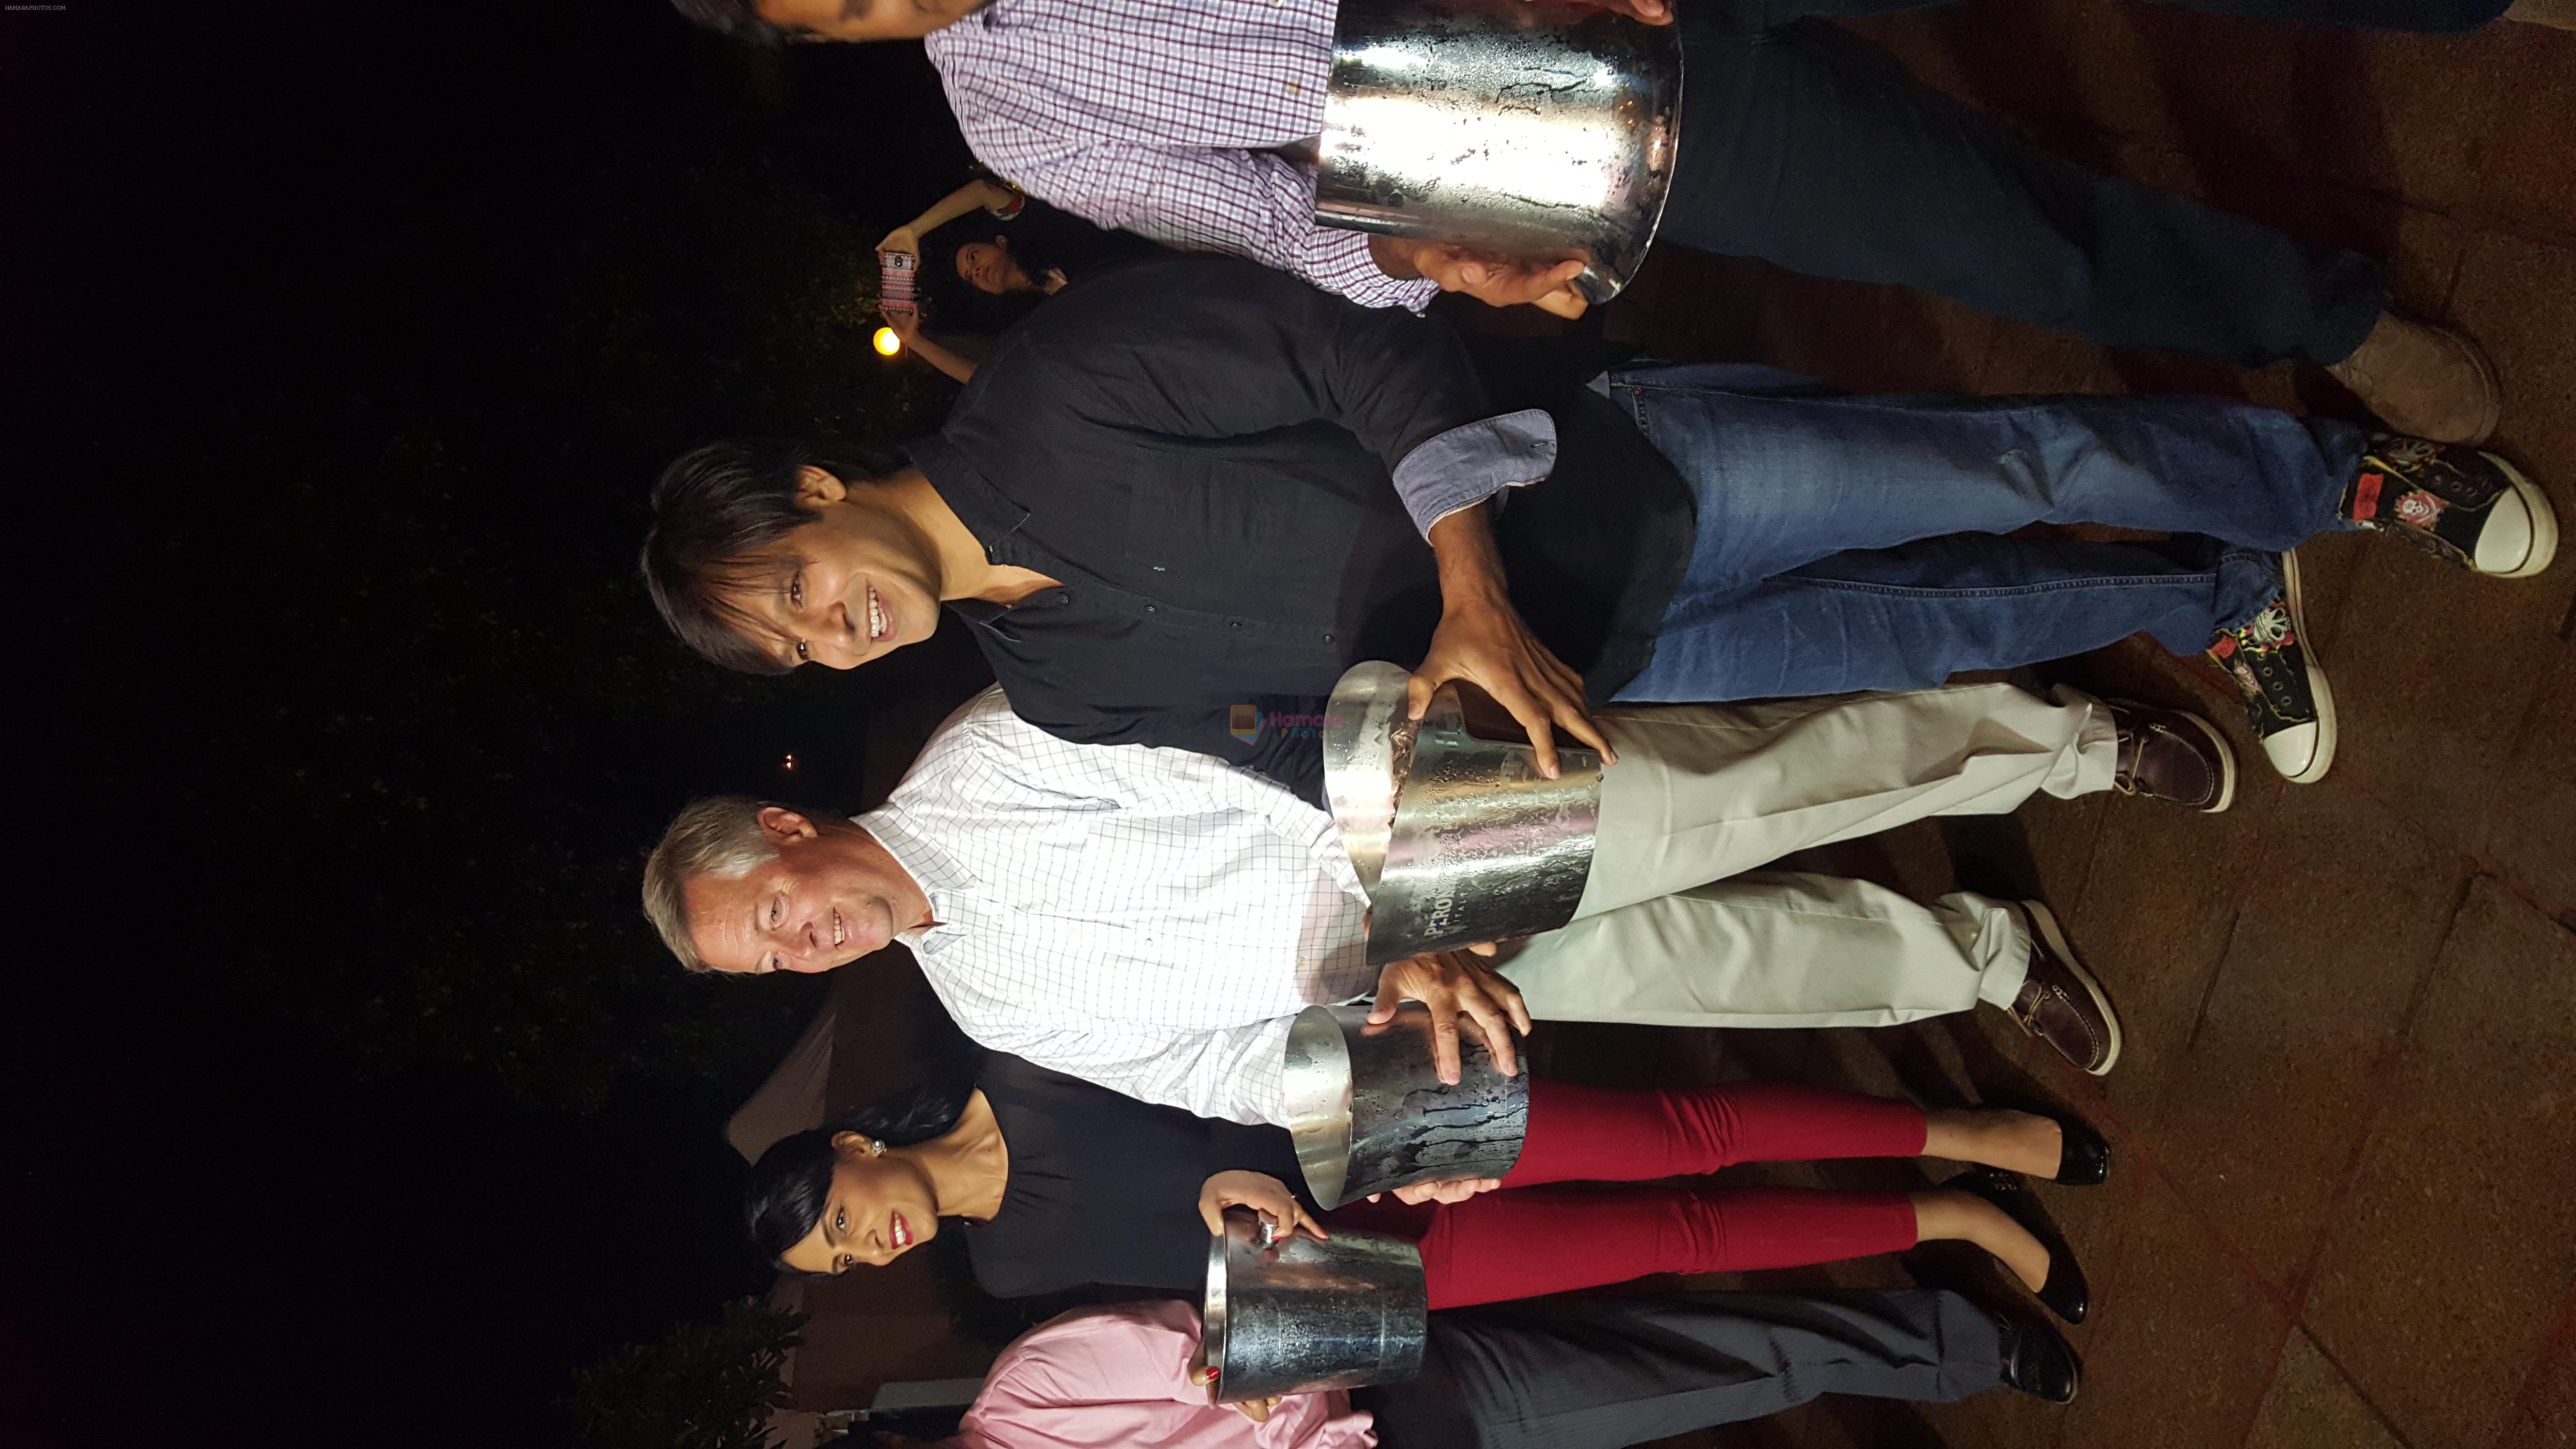 Vivek Oberoi takes on ALS Ice Bucket Challenge on 19th Sept 2015